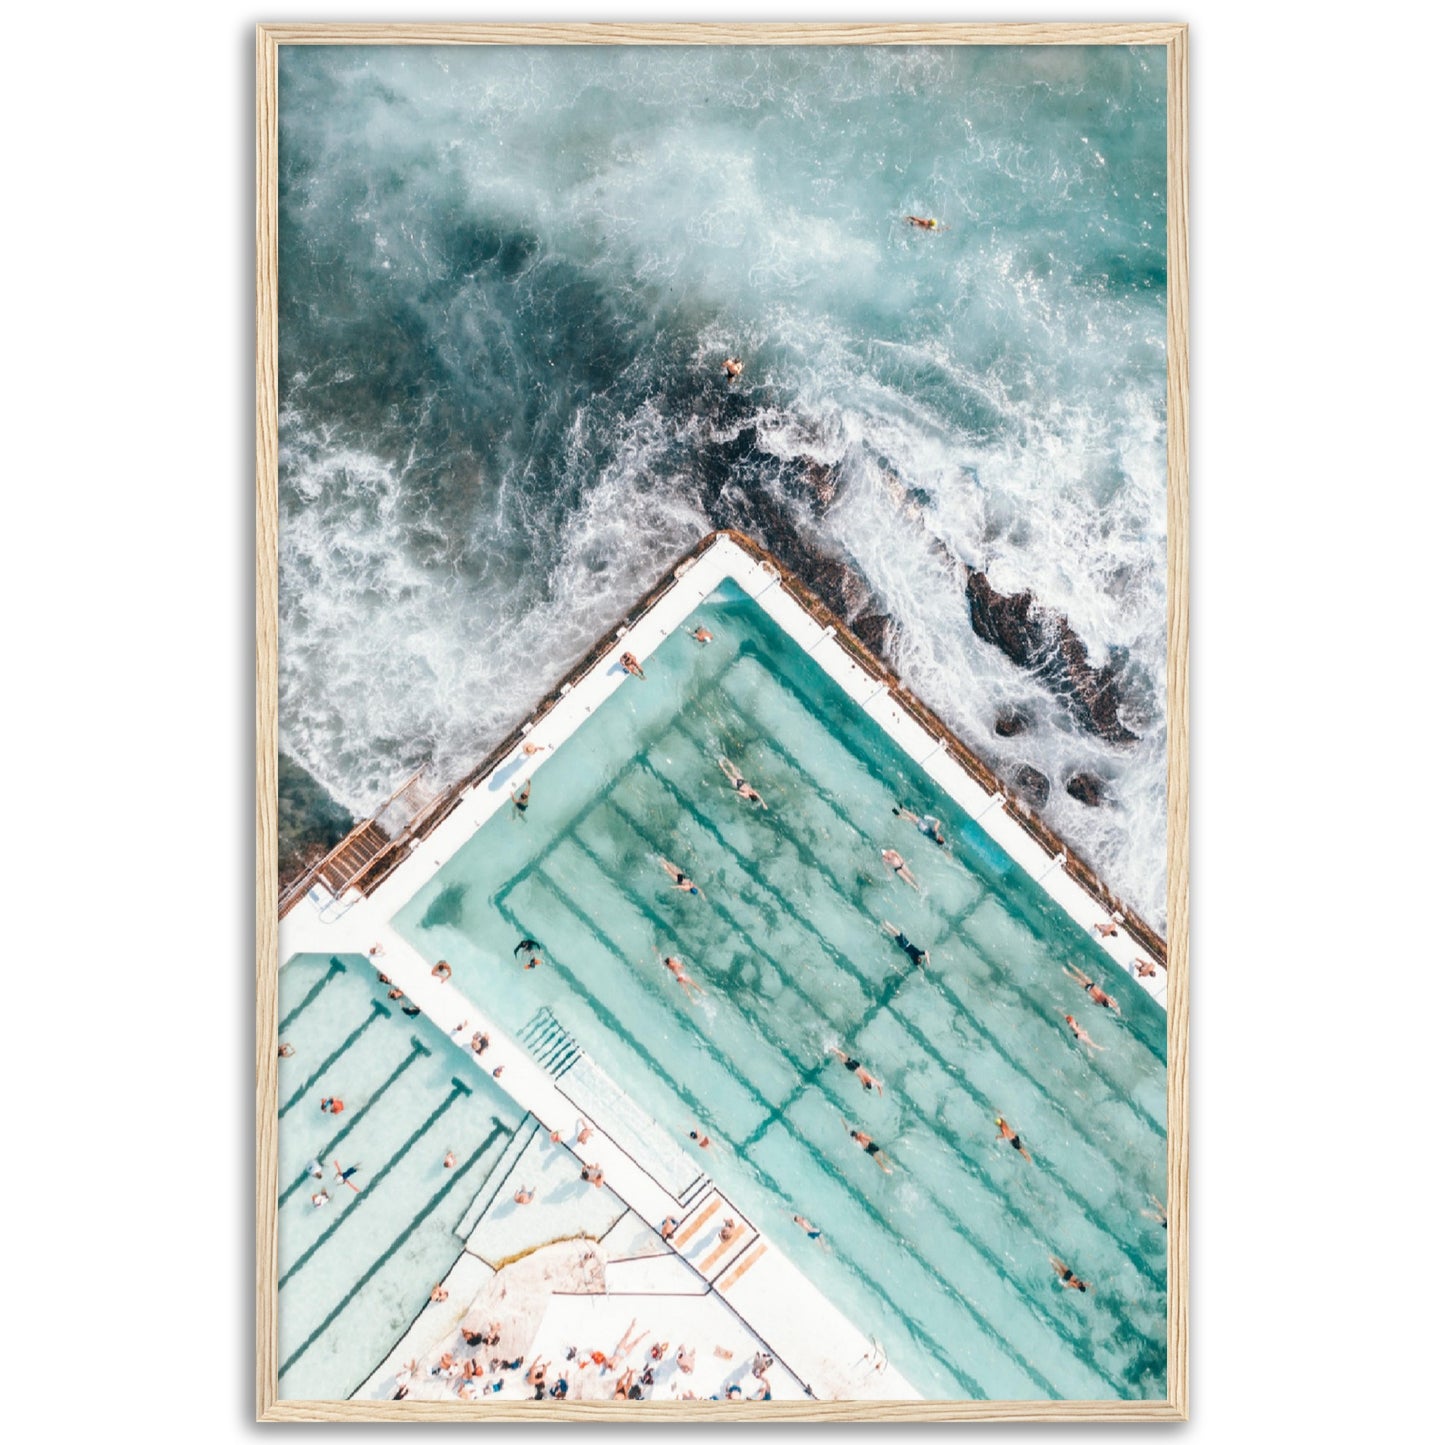 Aerial Bondi Beach Poster